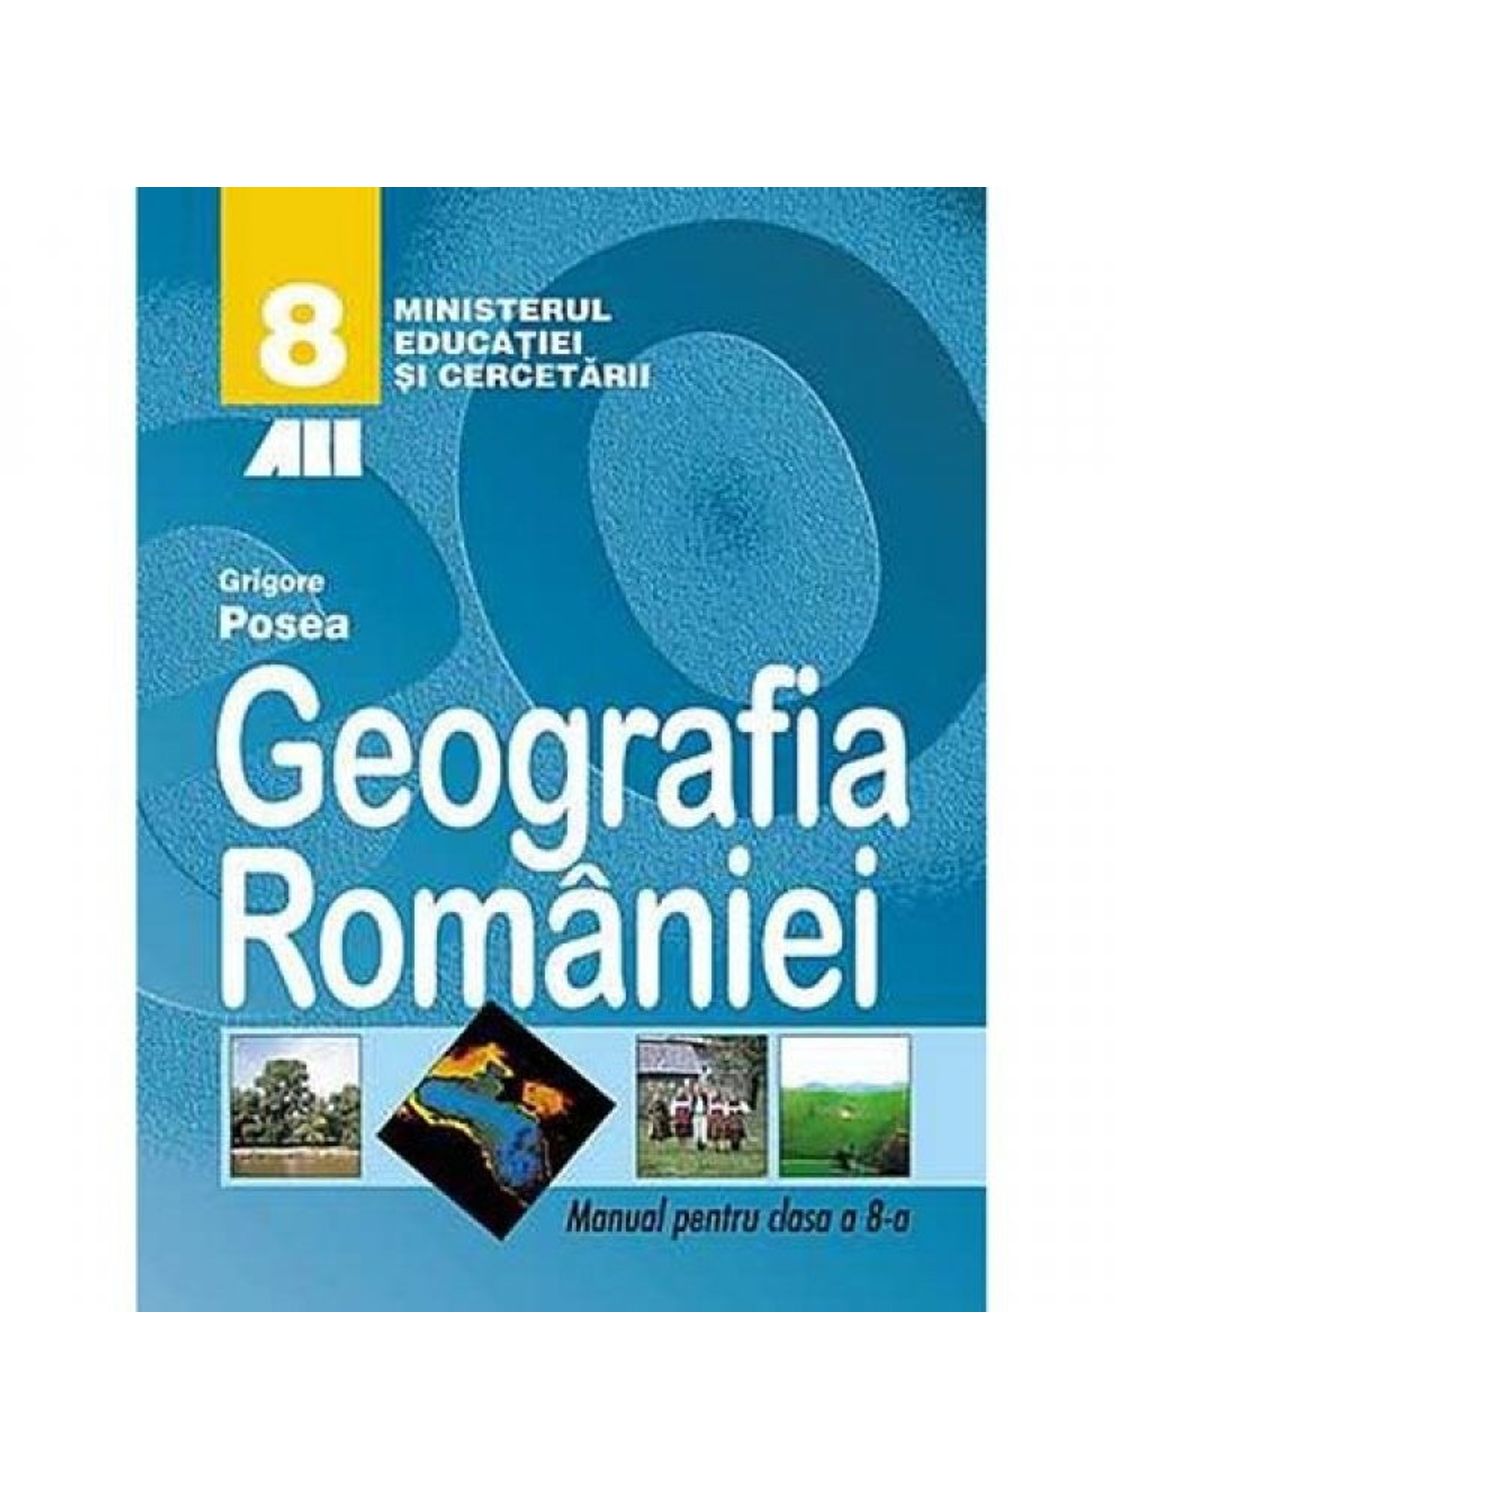 Geografia Romaniei. Manual pentru clasa a VIII-a,8899